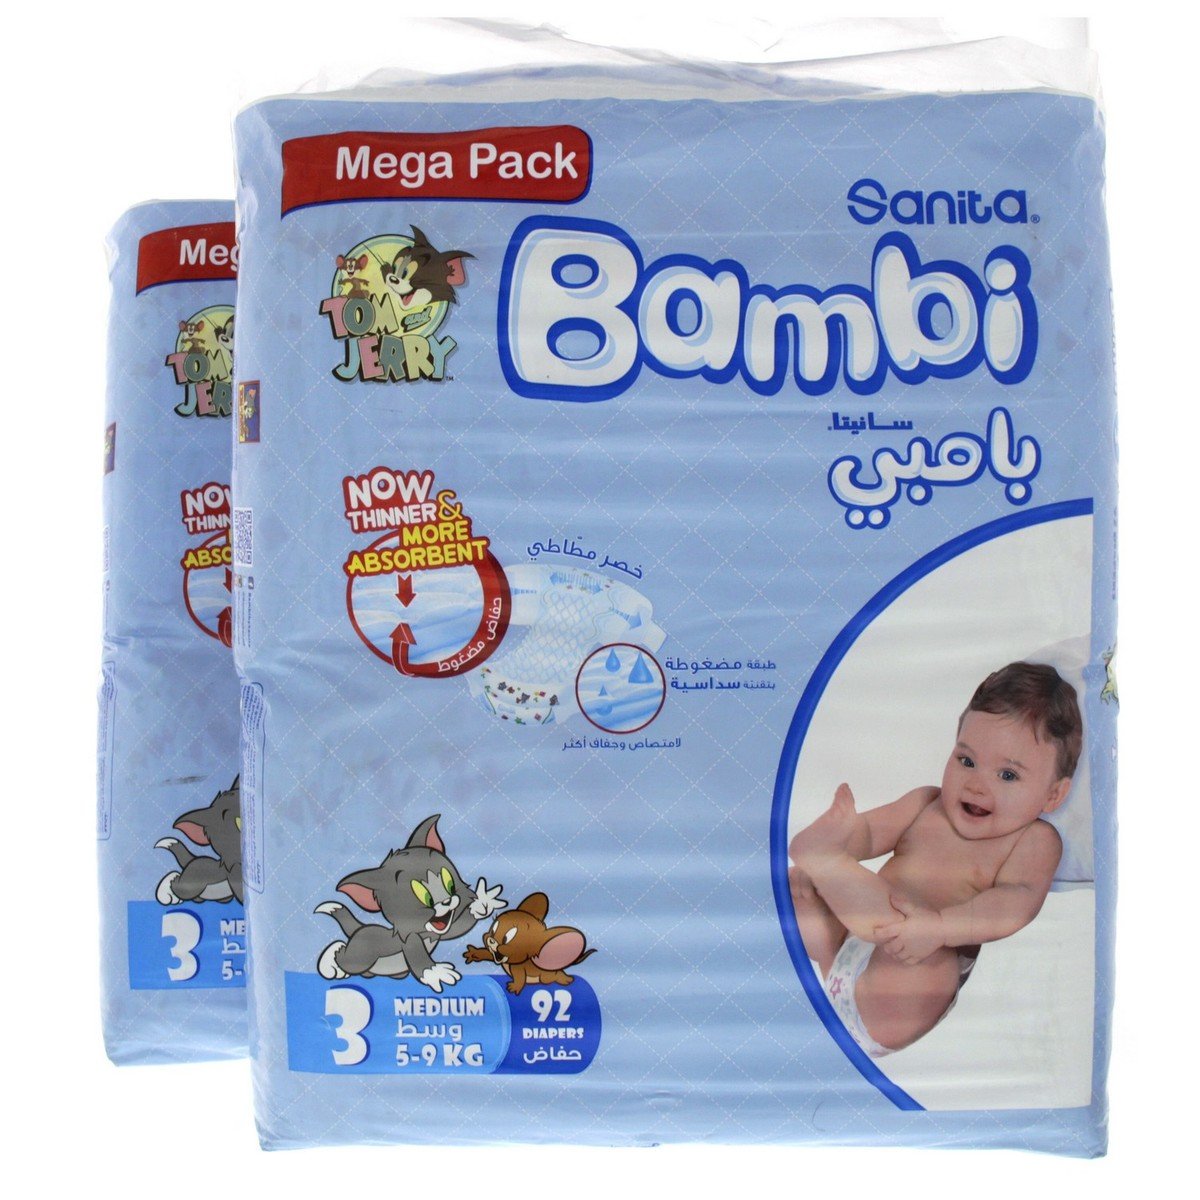 Sanita Bambi Baby Diaper Size 3 Medium 5-9kg Mega Pack 2 x 92pcs